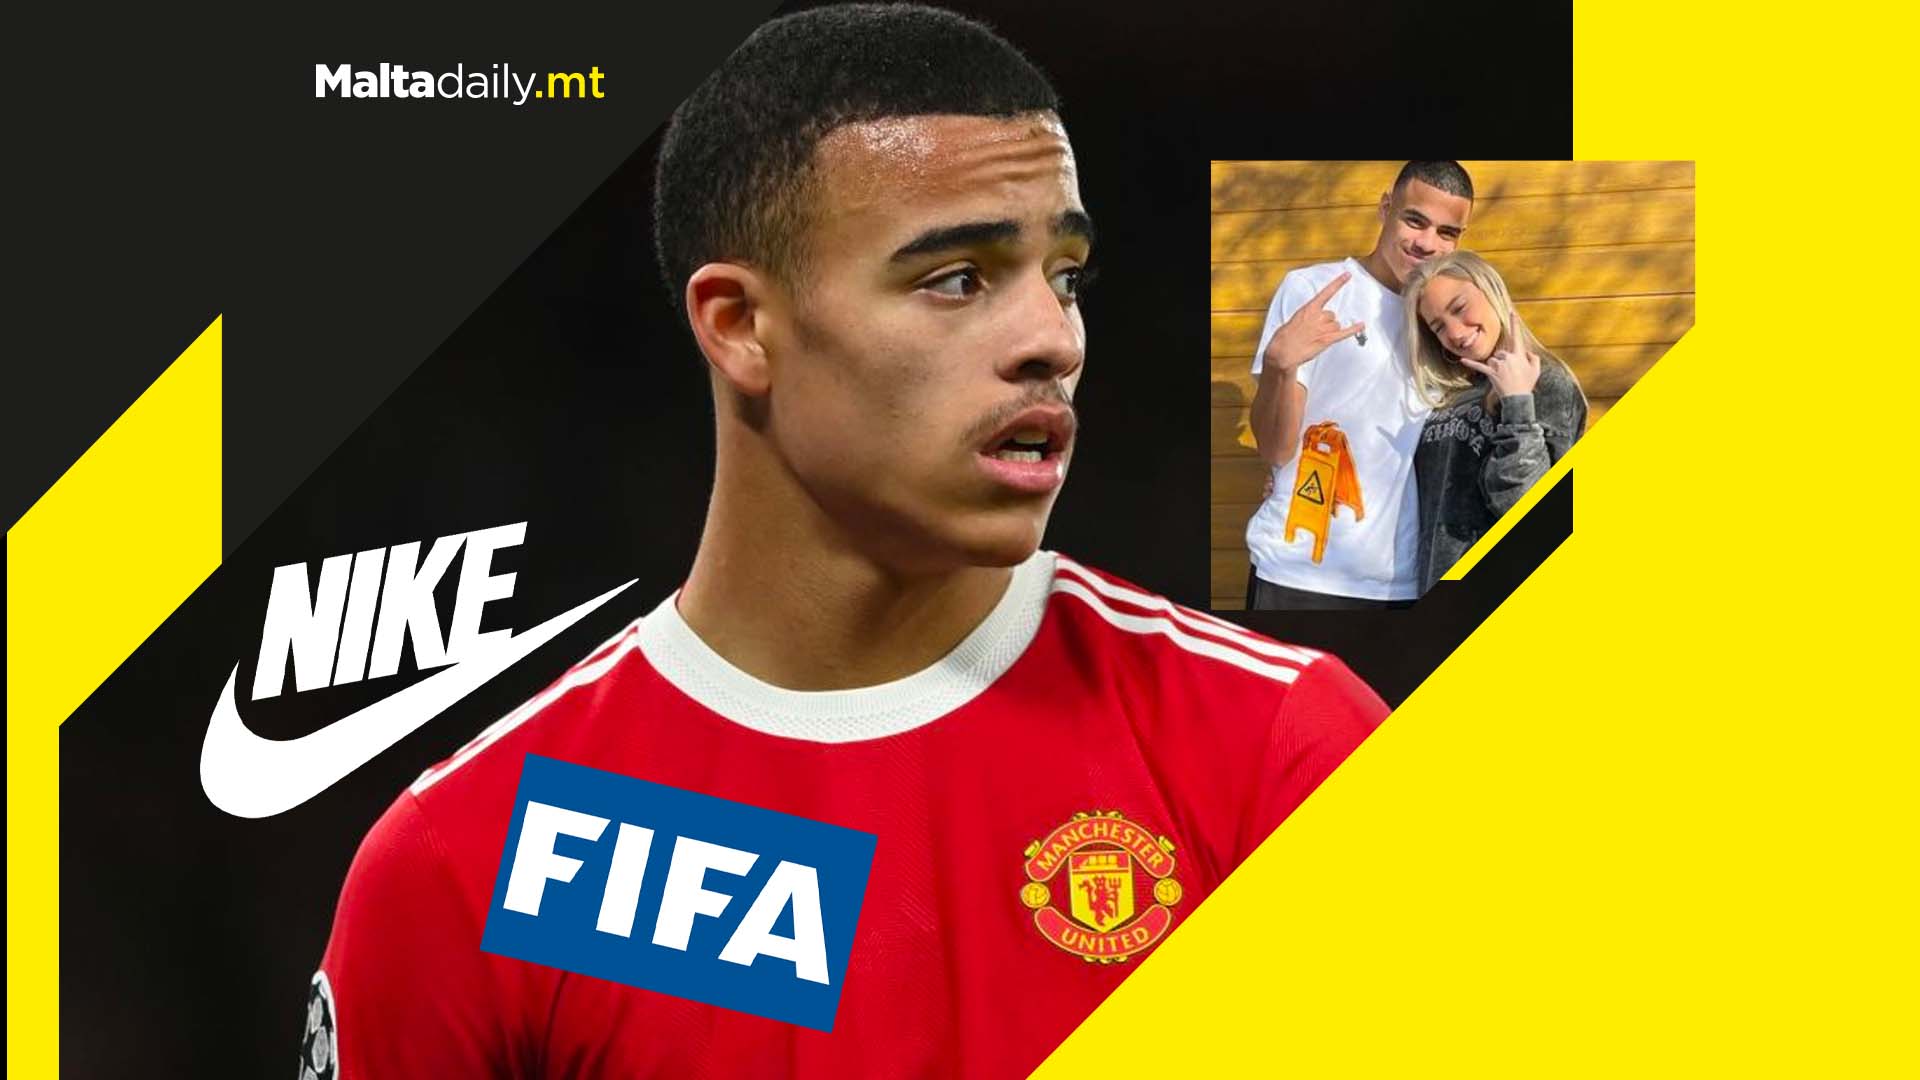 Man Utd striker Mason Greenwood removed from FIFA 22, Nike breaks ties